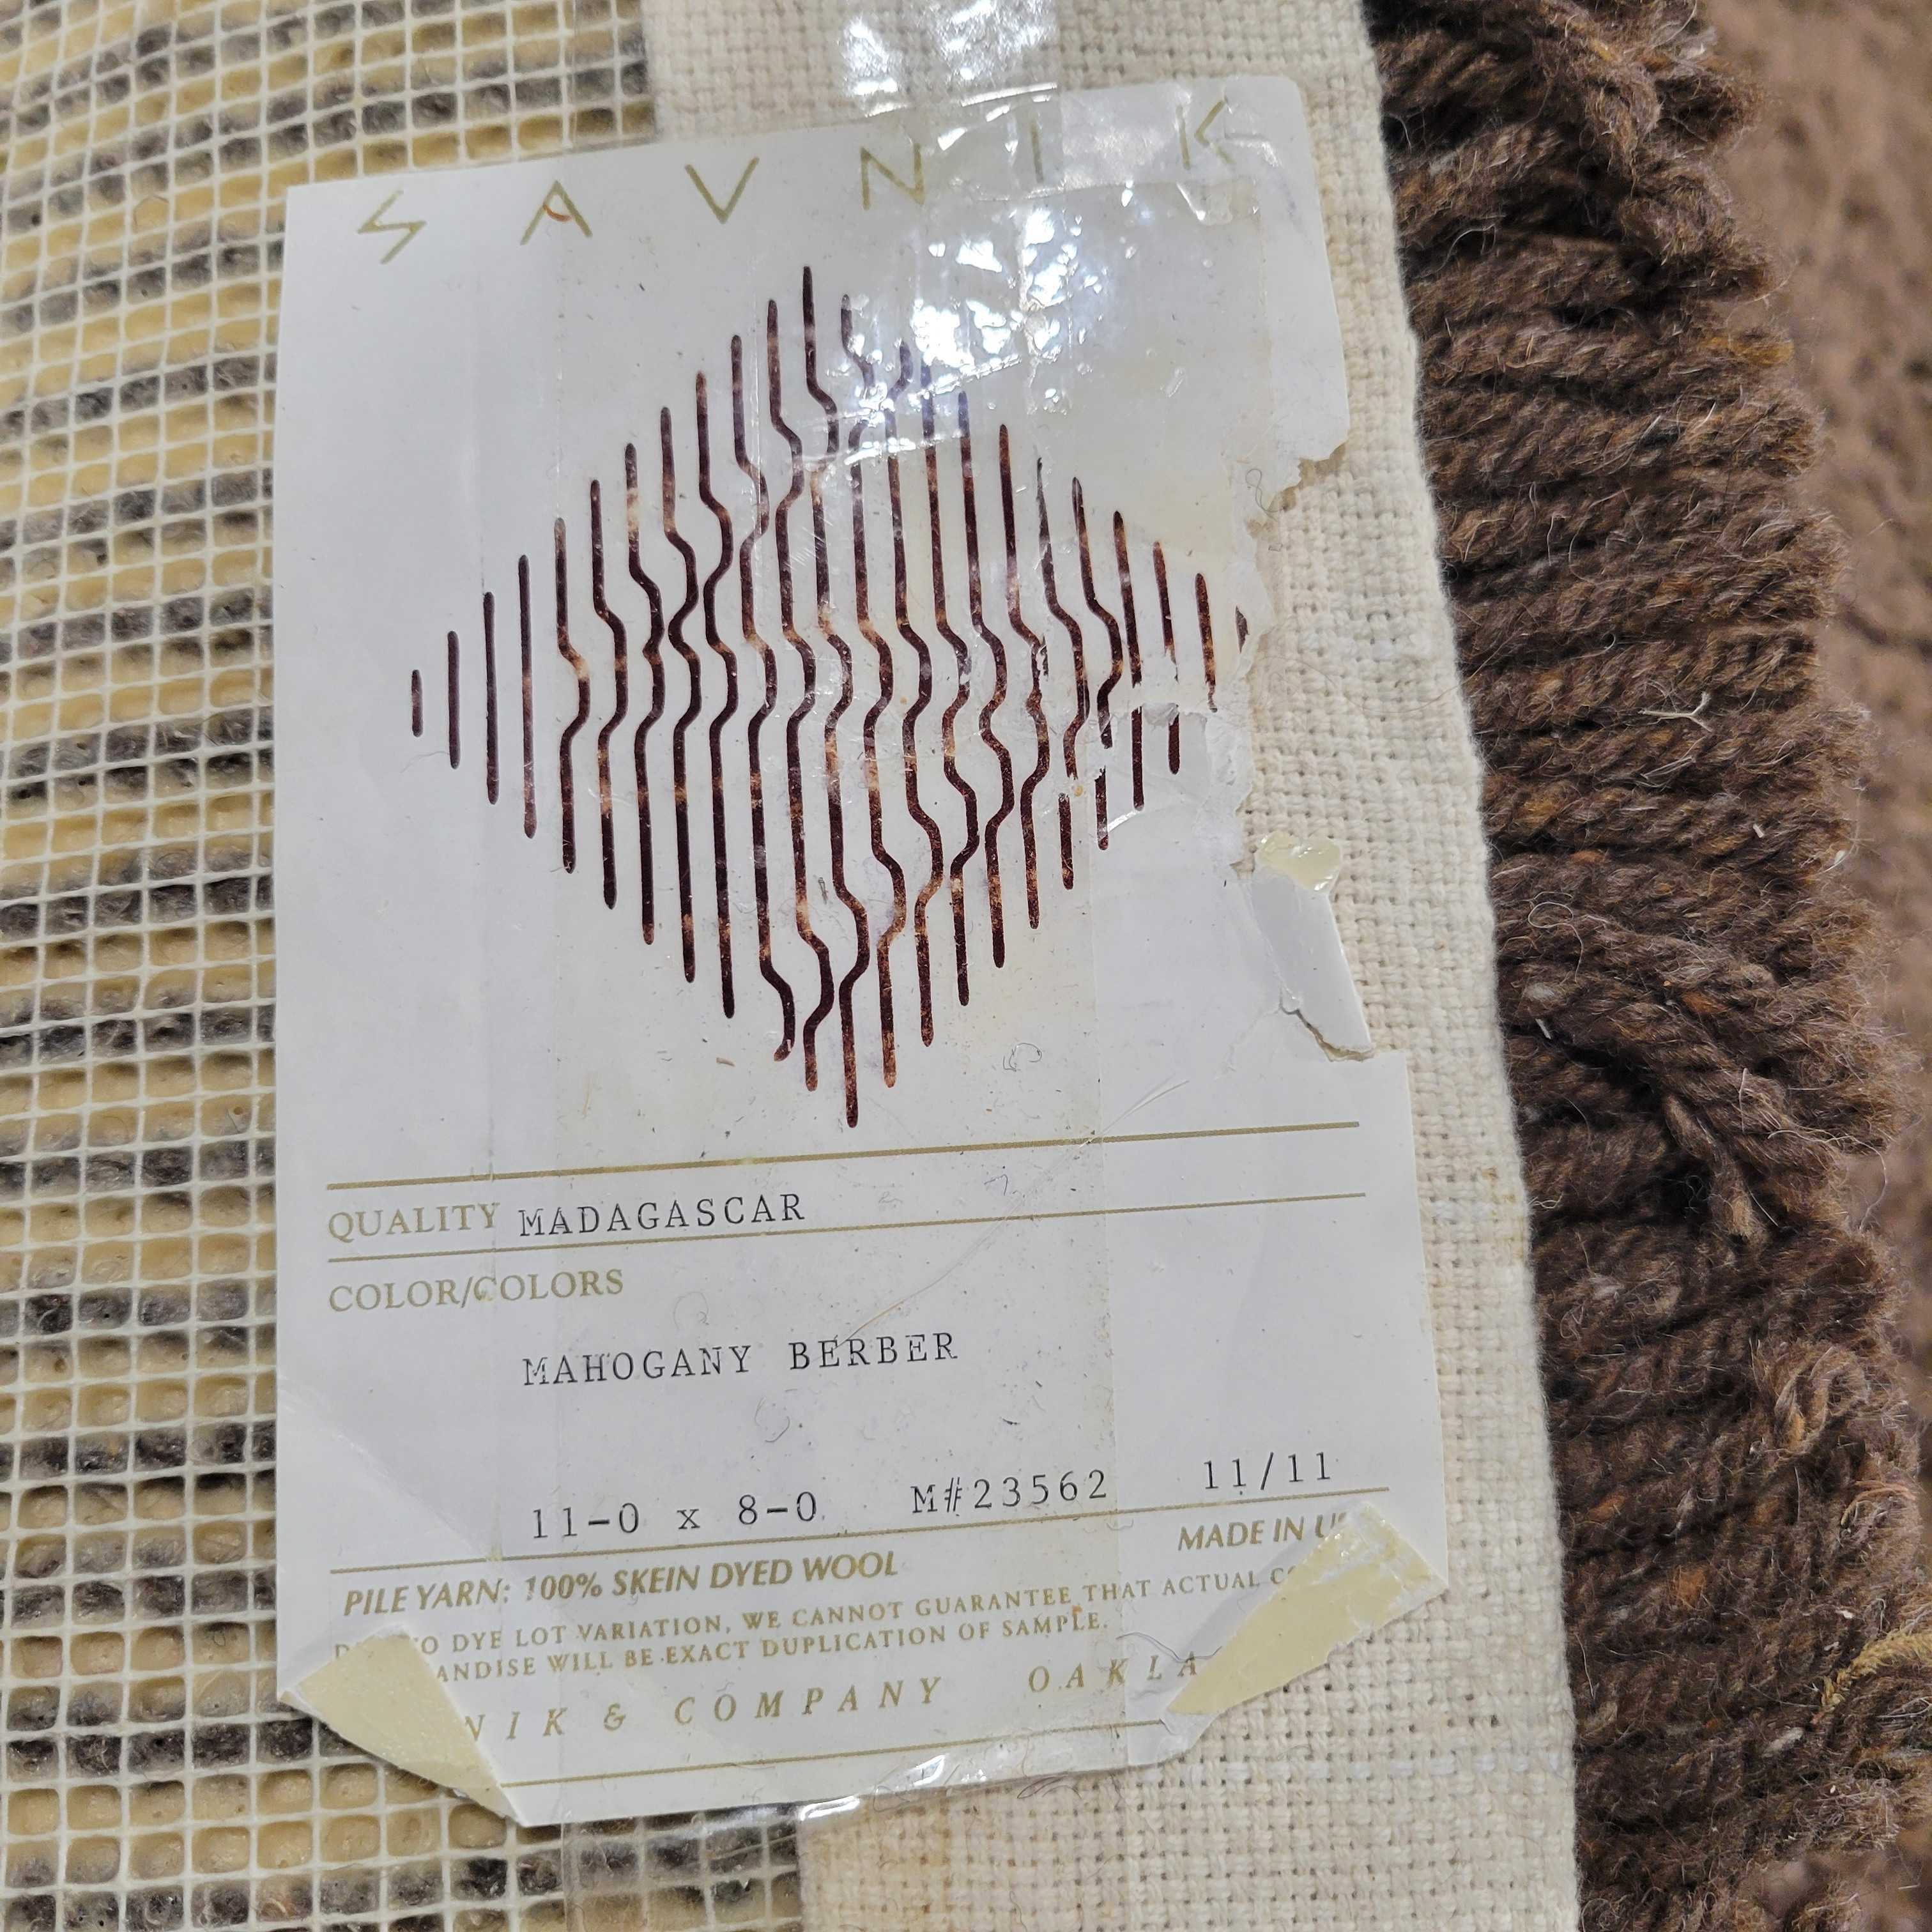 8'x 11' Savnik Madagascar Mahogany Berber Pile Yarn 100% Skein Dyed Wool Rug